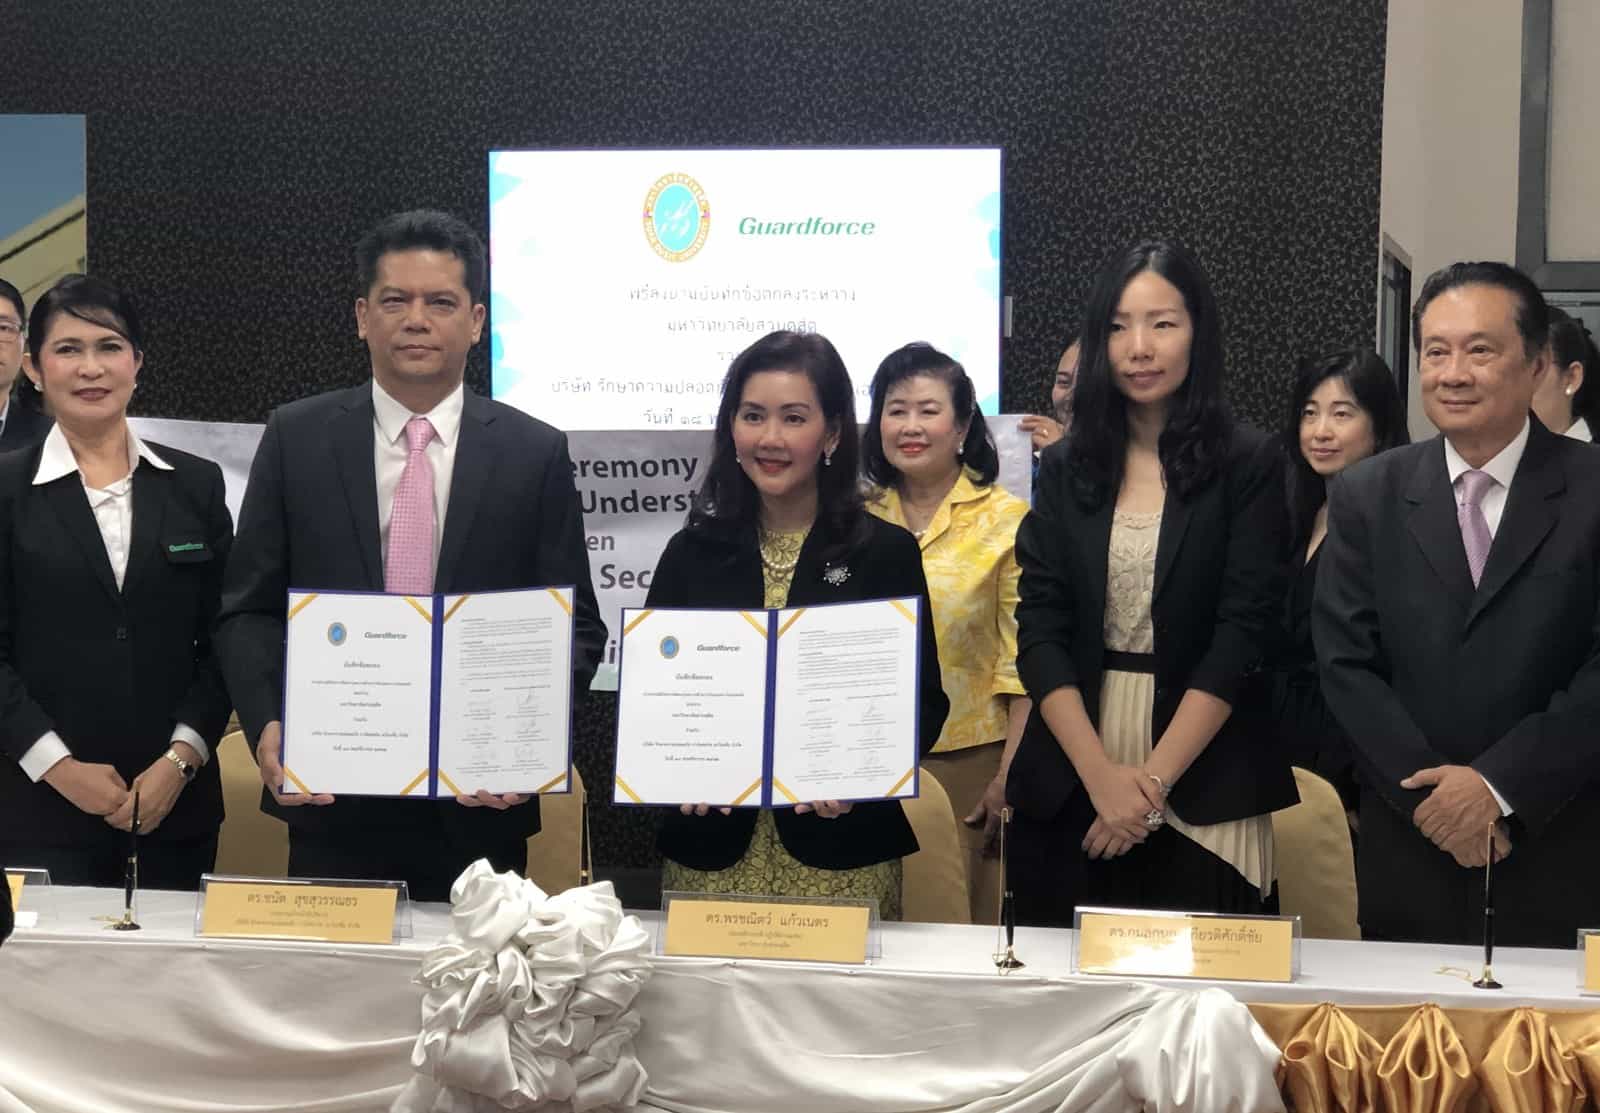 2019.11.18 | Guardforce Aviation Security Co., Ltd, signed a Memorandum of Understanding (MoU) with Suan Dusit University